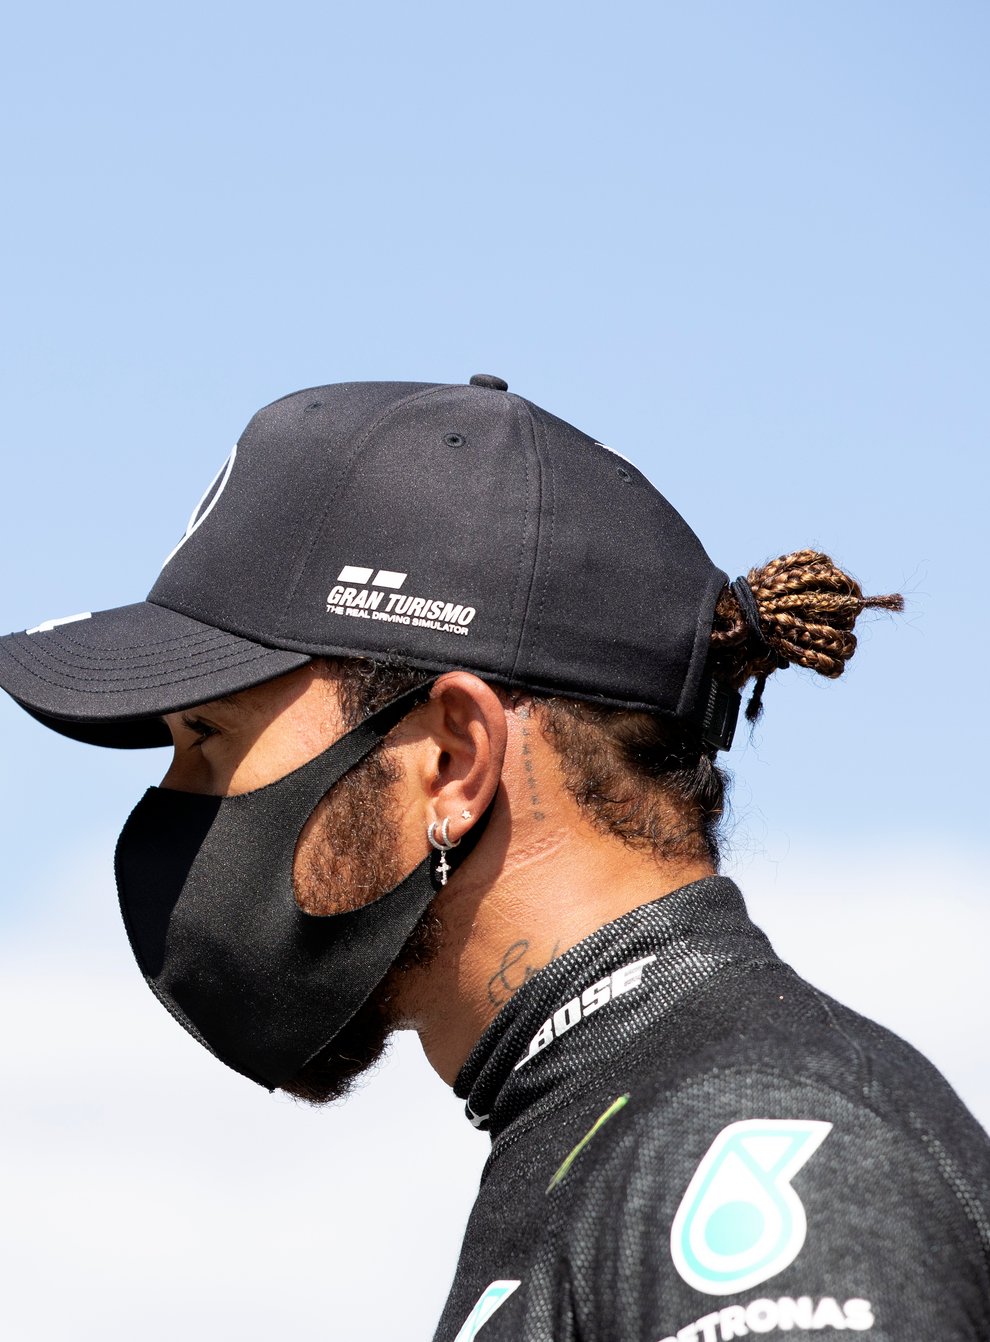 Lewis Hamilton had a difficult weekend in Austria